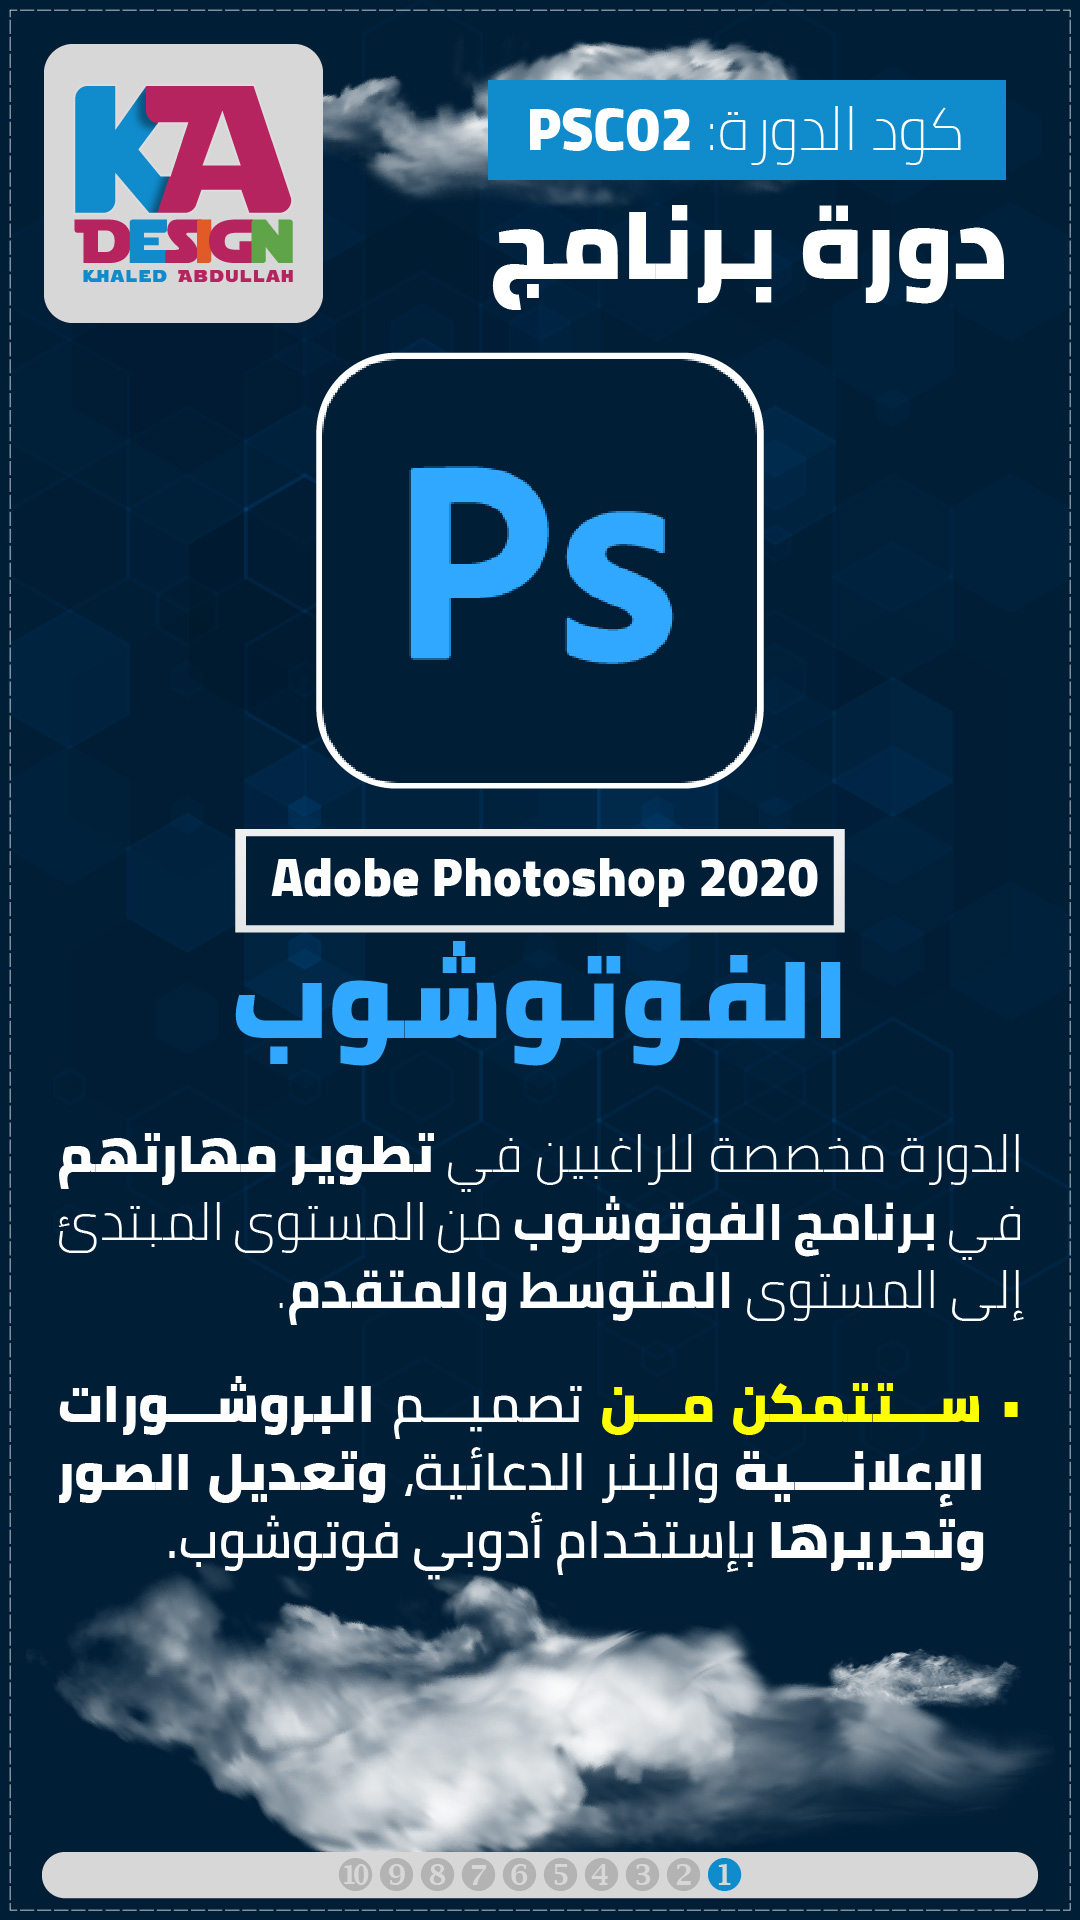 Adobe Photoshop Course